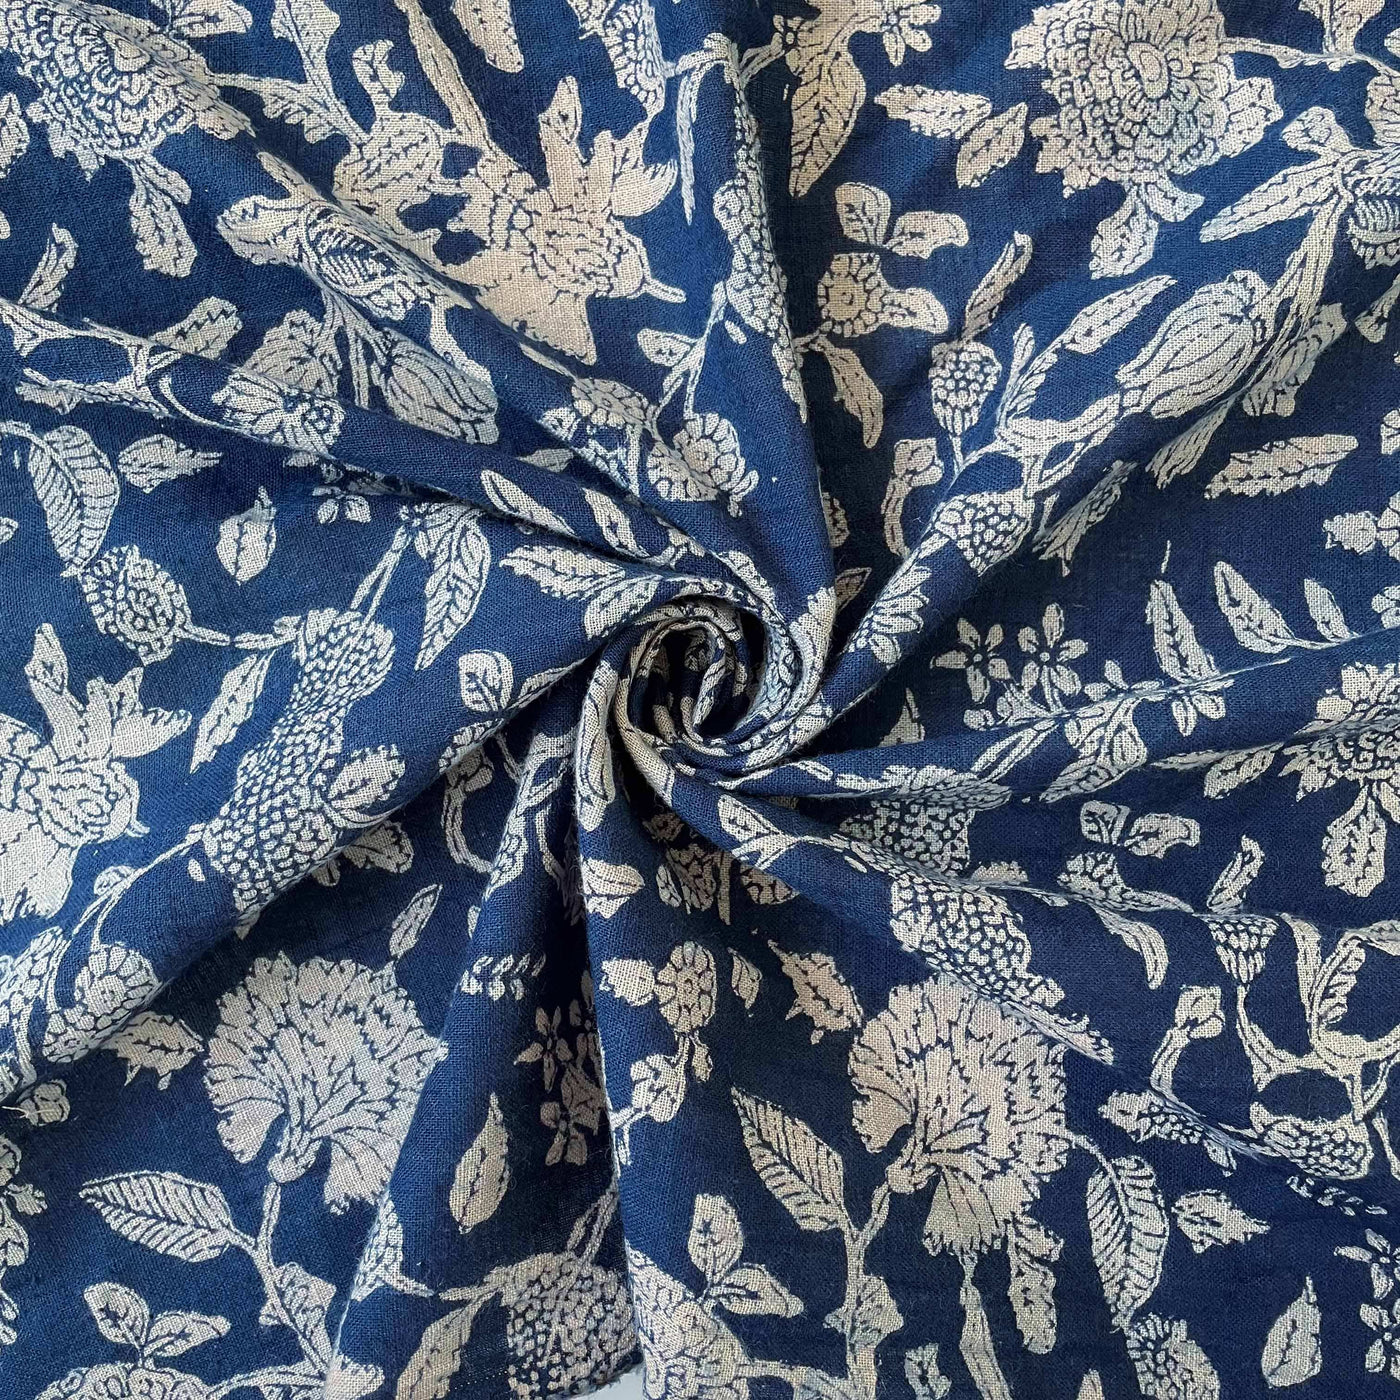 Printed Cotton Linen Fabric Cut Piece (CUT PIECE) Indigo Blue Garden Of Wildflowers Hand Block Printed Pure Cotton Linen Fabric (Width 42 inches)